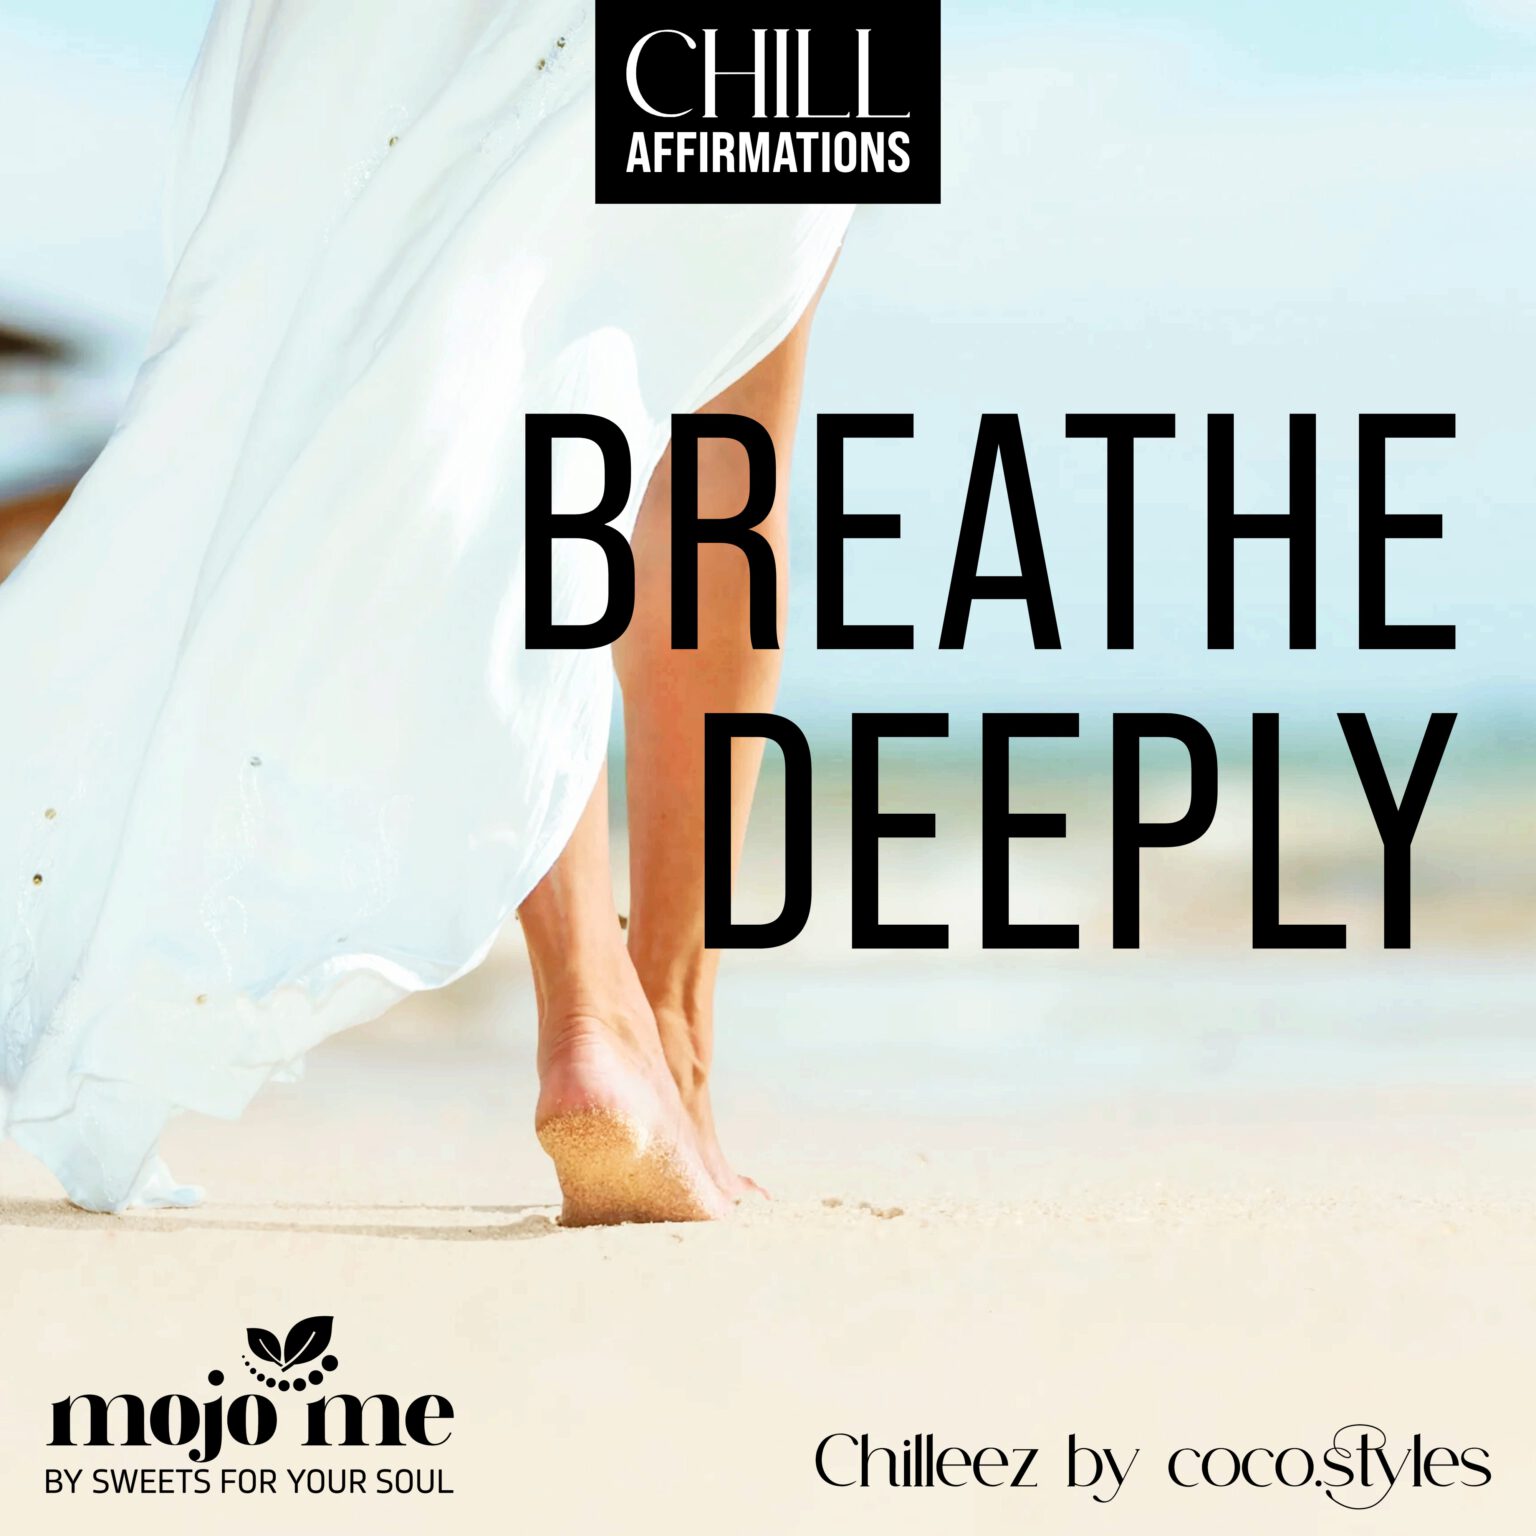 Breathe deeply - Chilleez